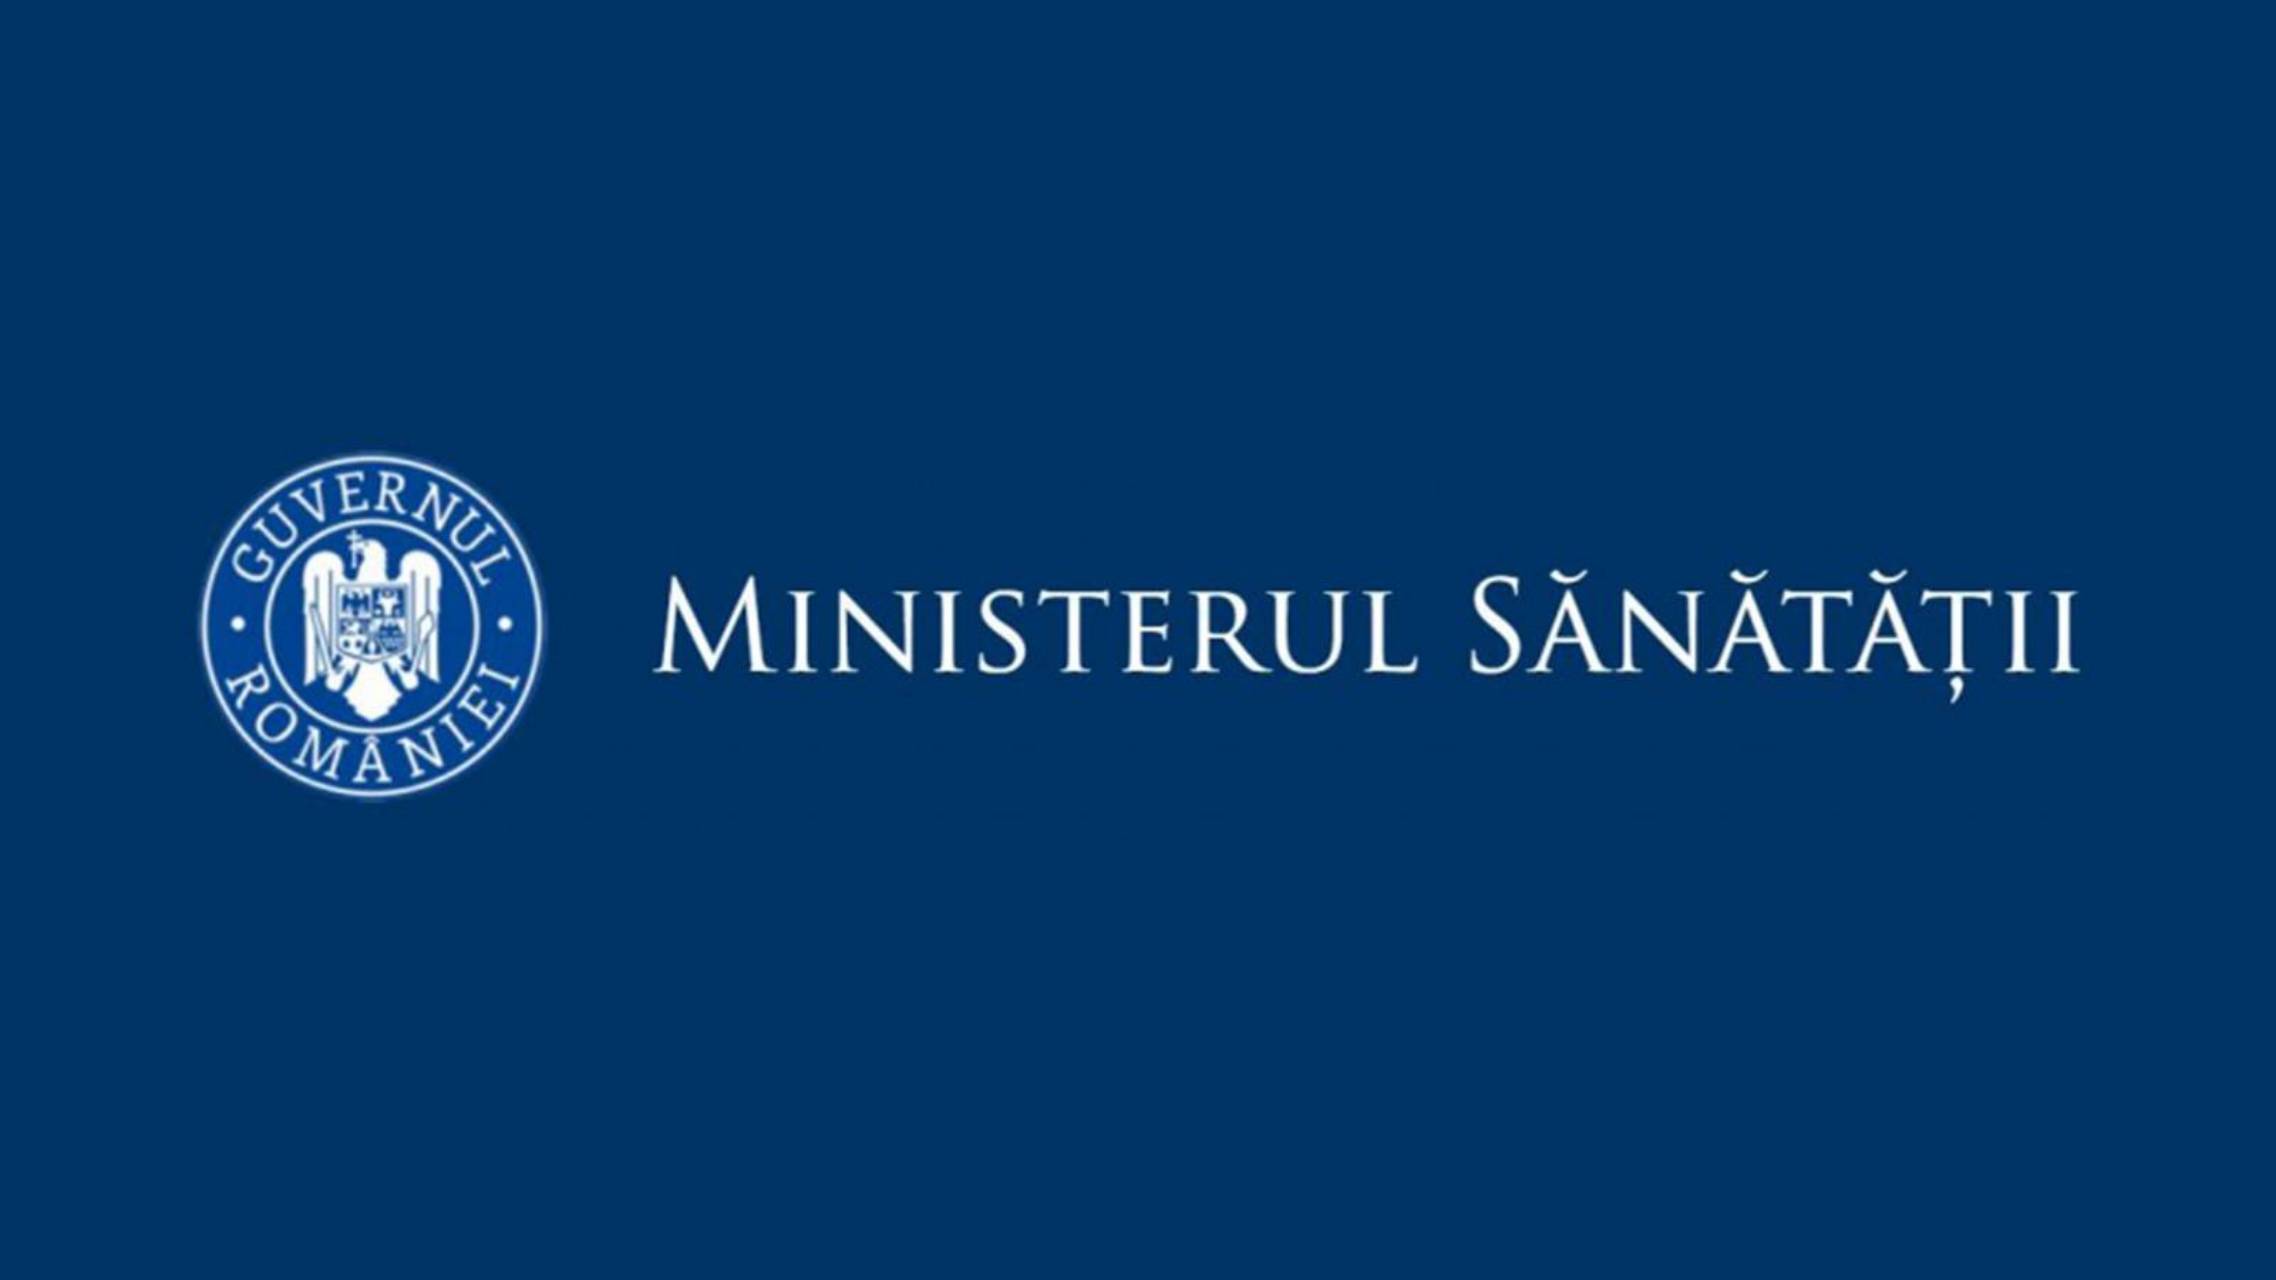 Ministerul Sanatatii periculoase judete din Romania Pandemia Coronavirus